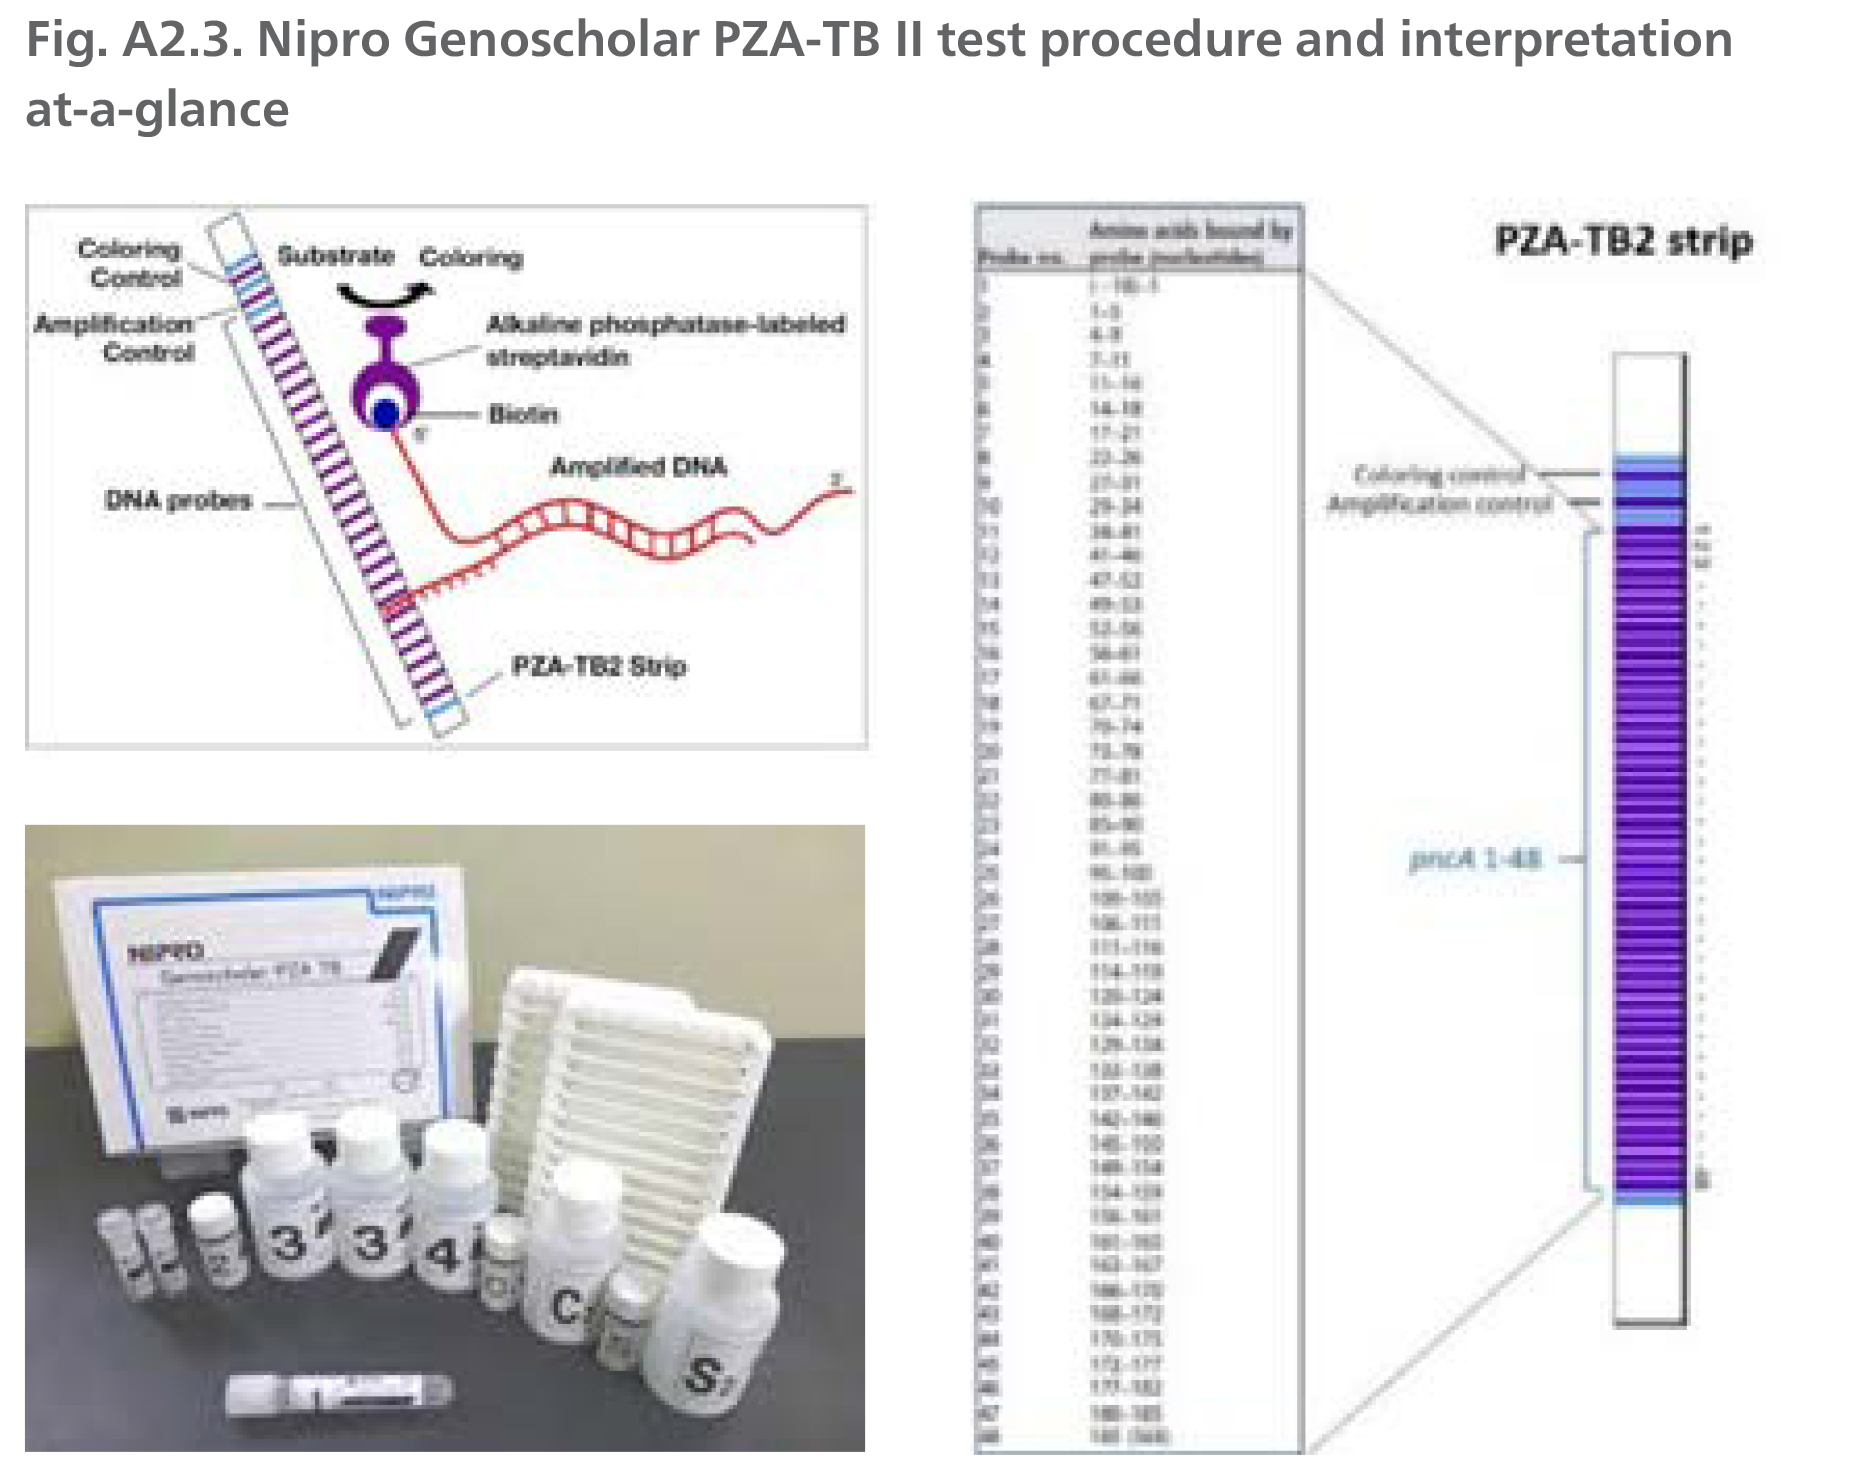 Nipro Genoscholar PZA-TB II test procedure and interpretation at-a-glance